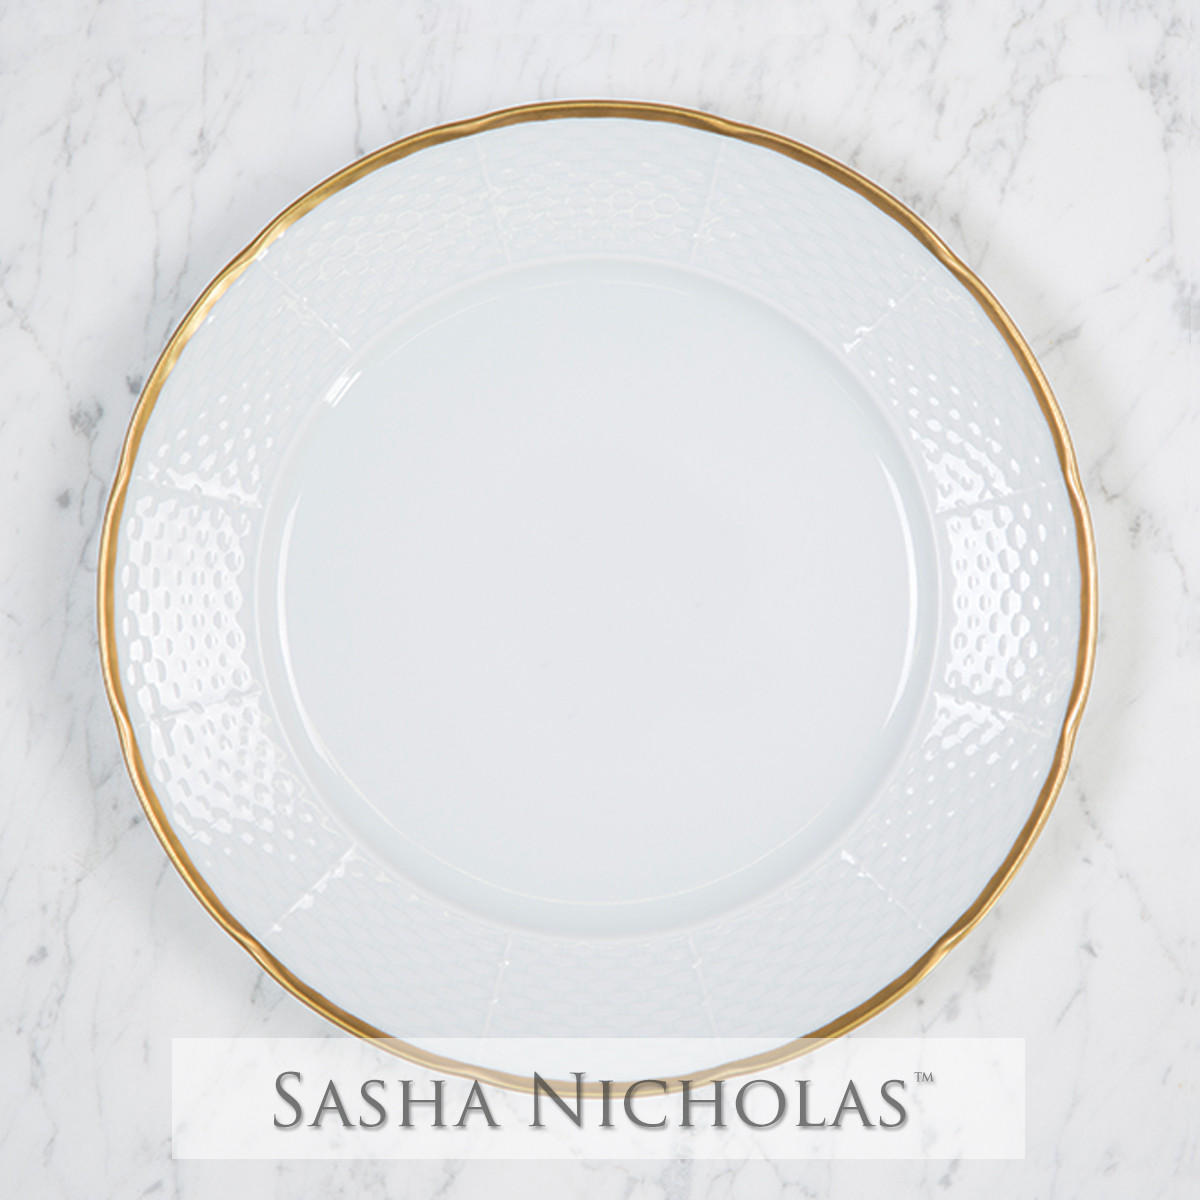 Sasha Nicholas Dorr-Park Weave 24K Gold Dinner Plate